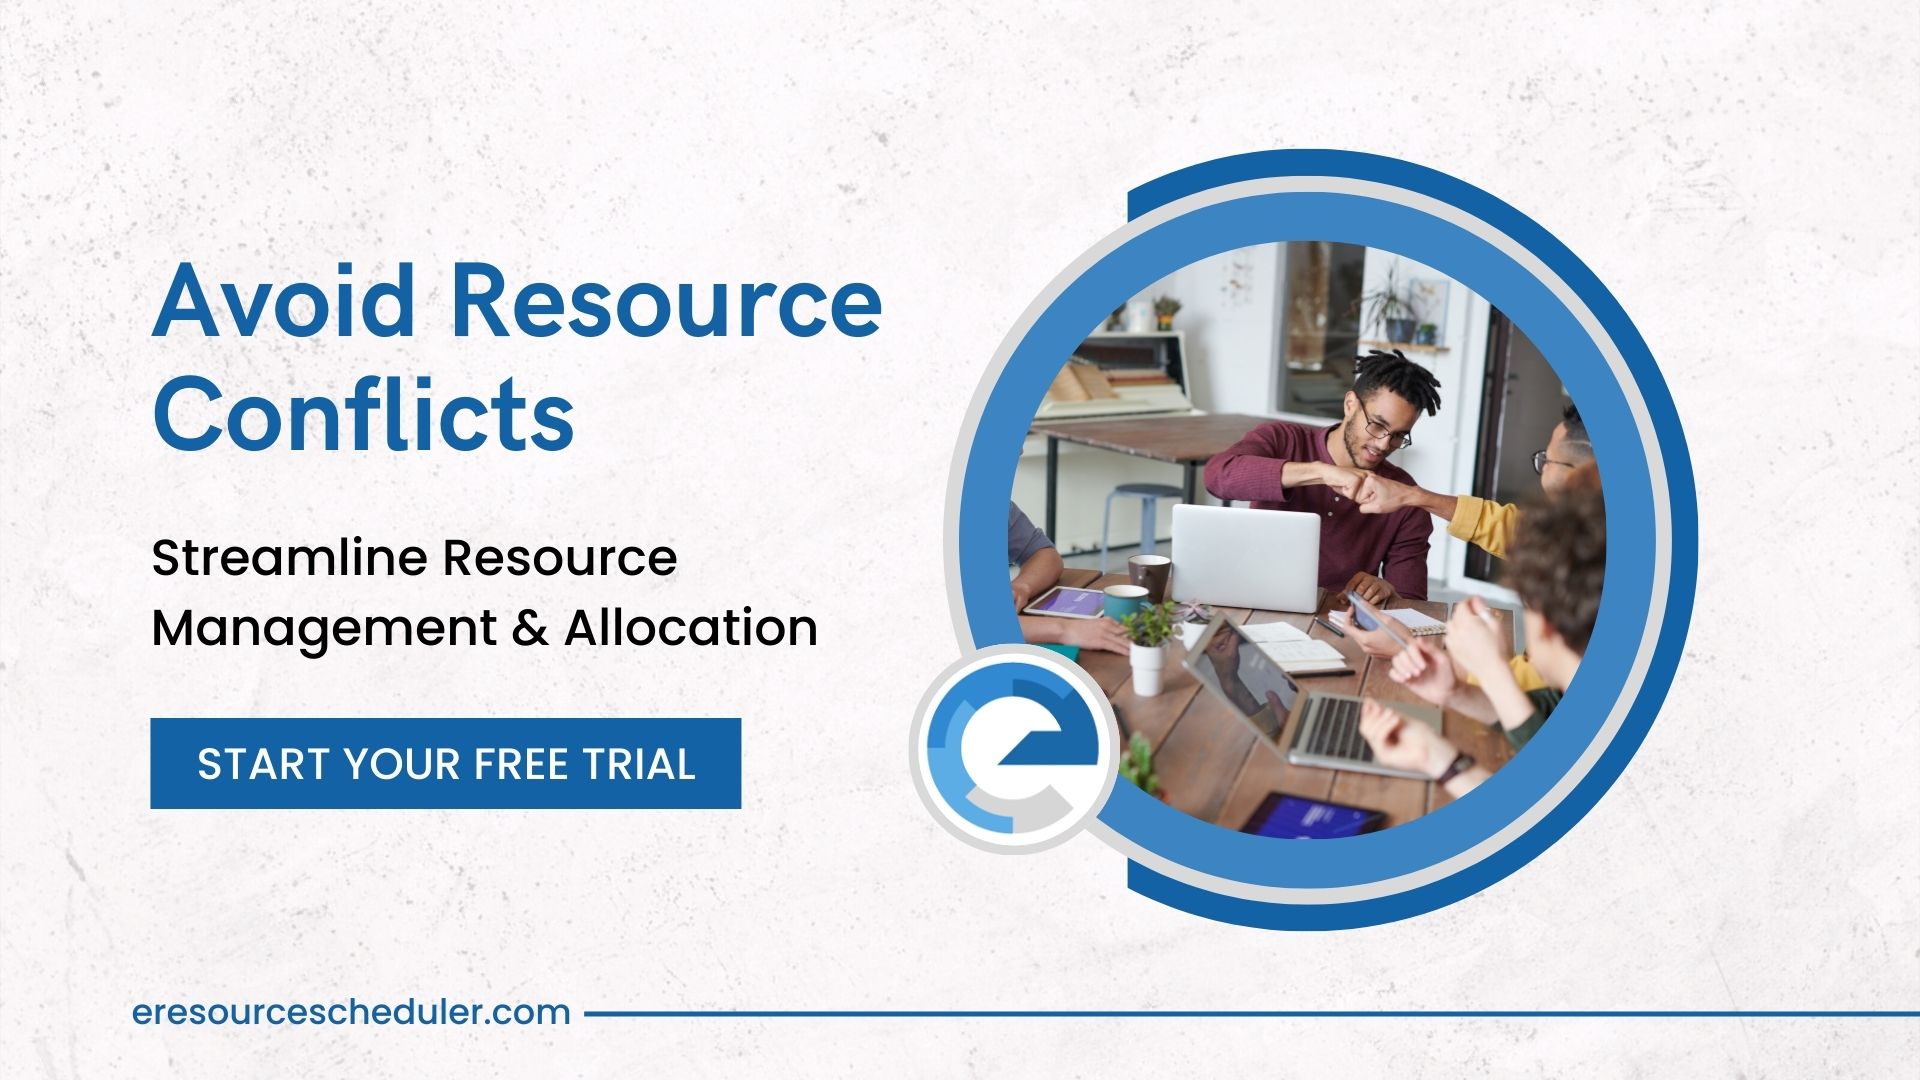 Resource management & Allocation